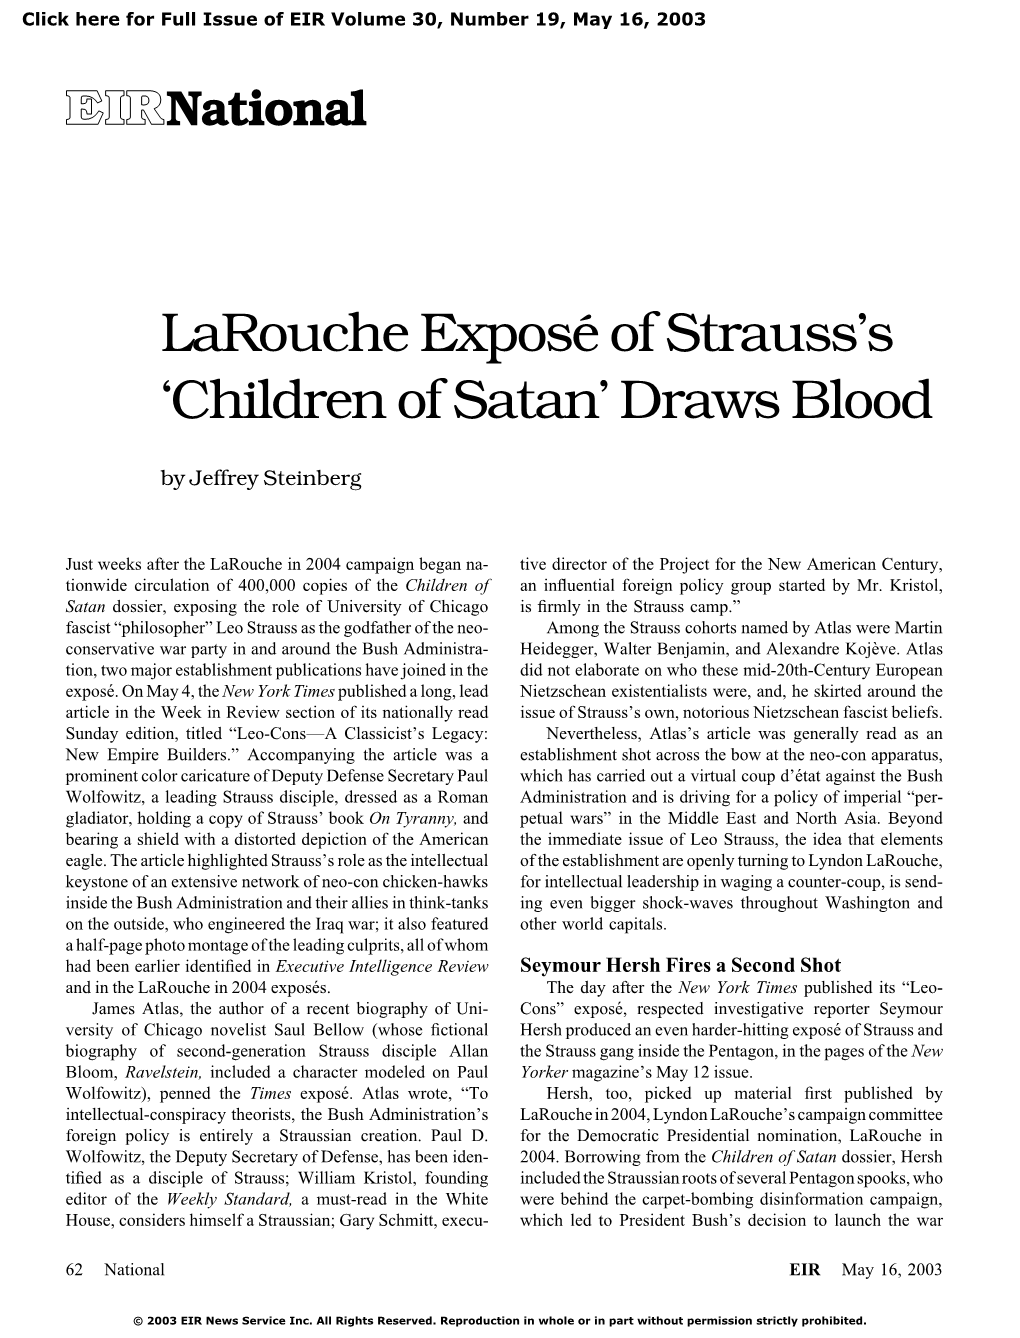 Larouche Exposé of Strauss's